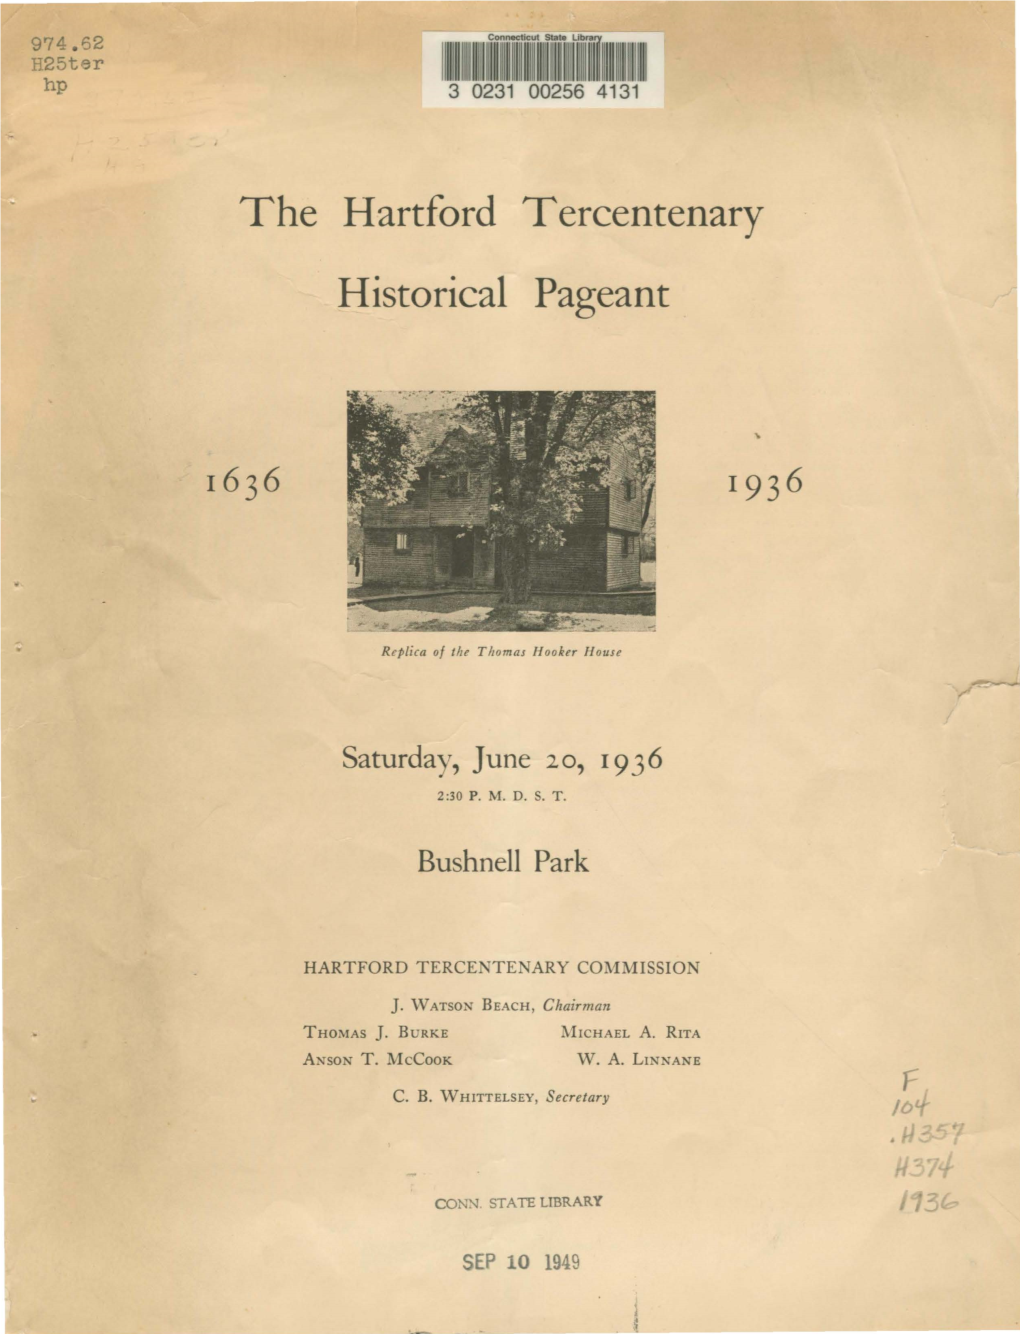 The Hartford Tercentenary Historical Pageant